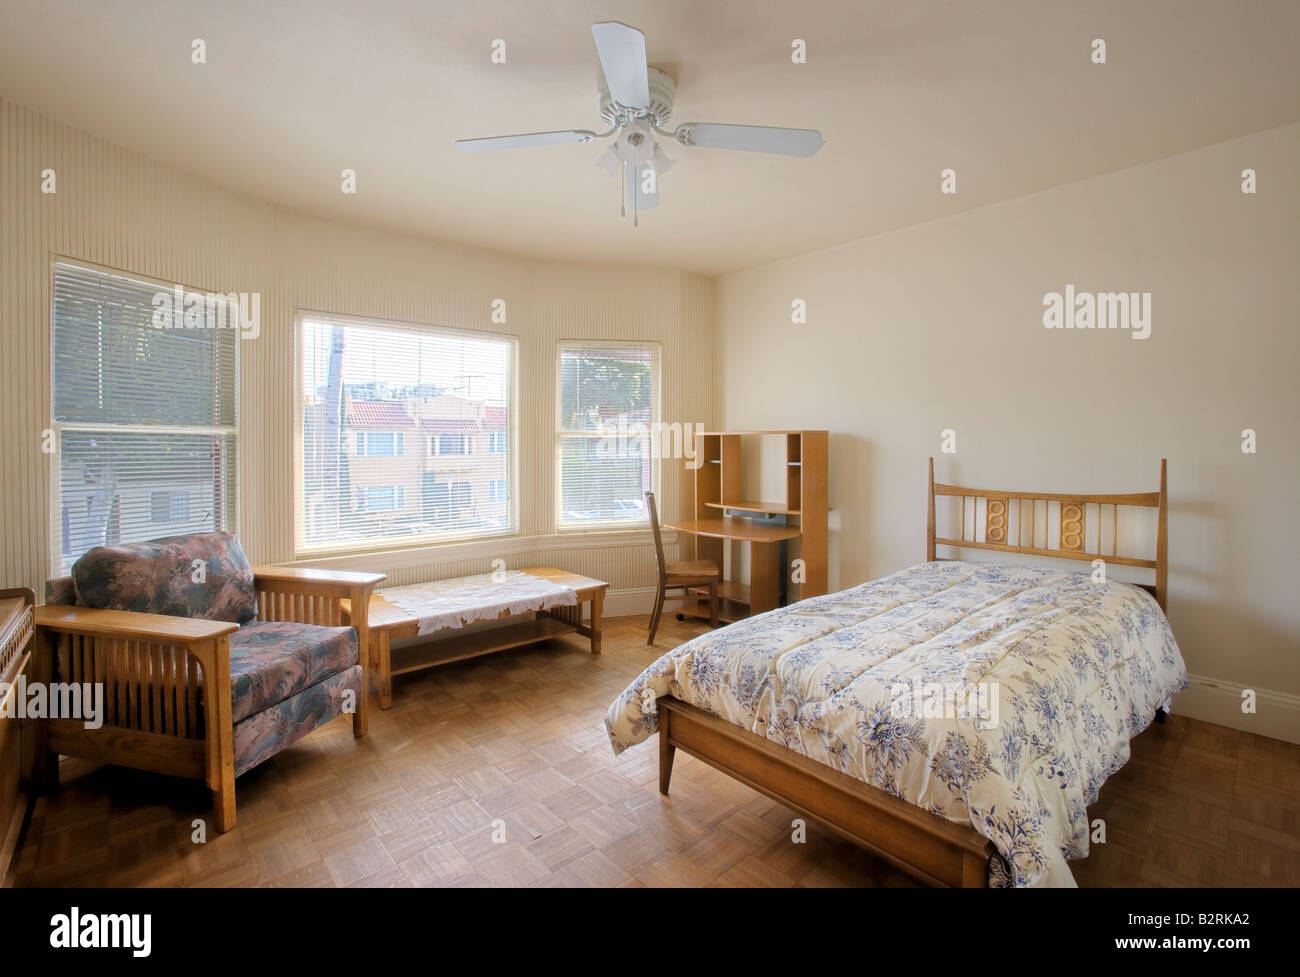 Karge Zimmer mit großem Fenster Stockfoto